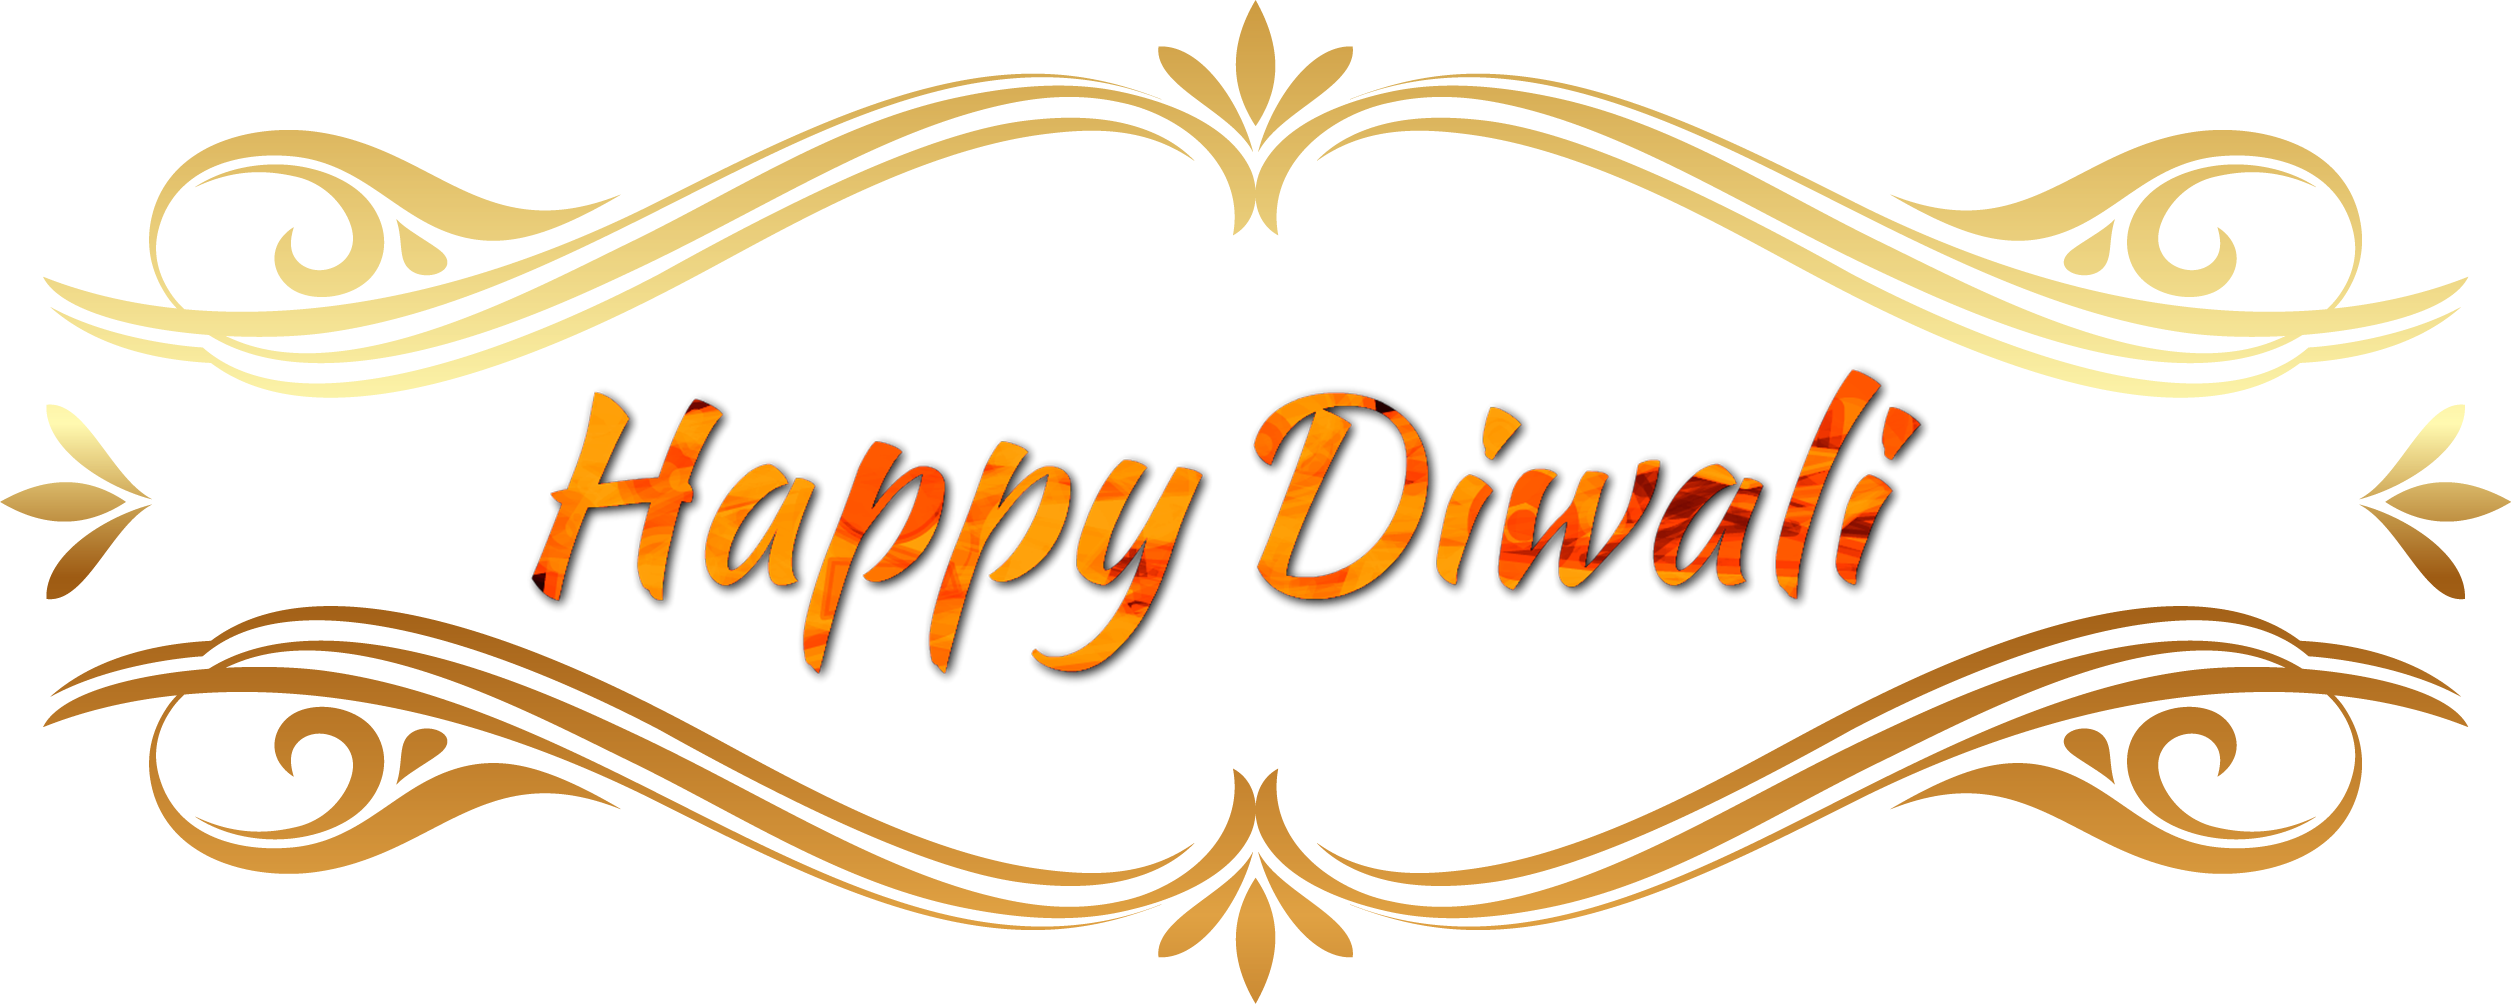 Happy Diwali PNG Image Transparent